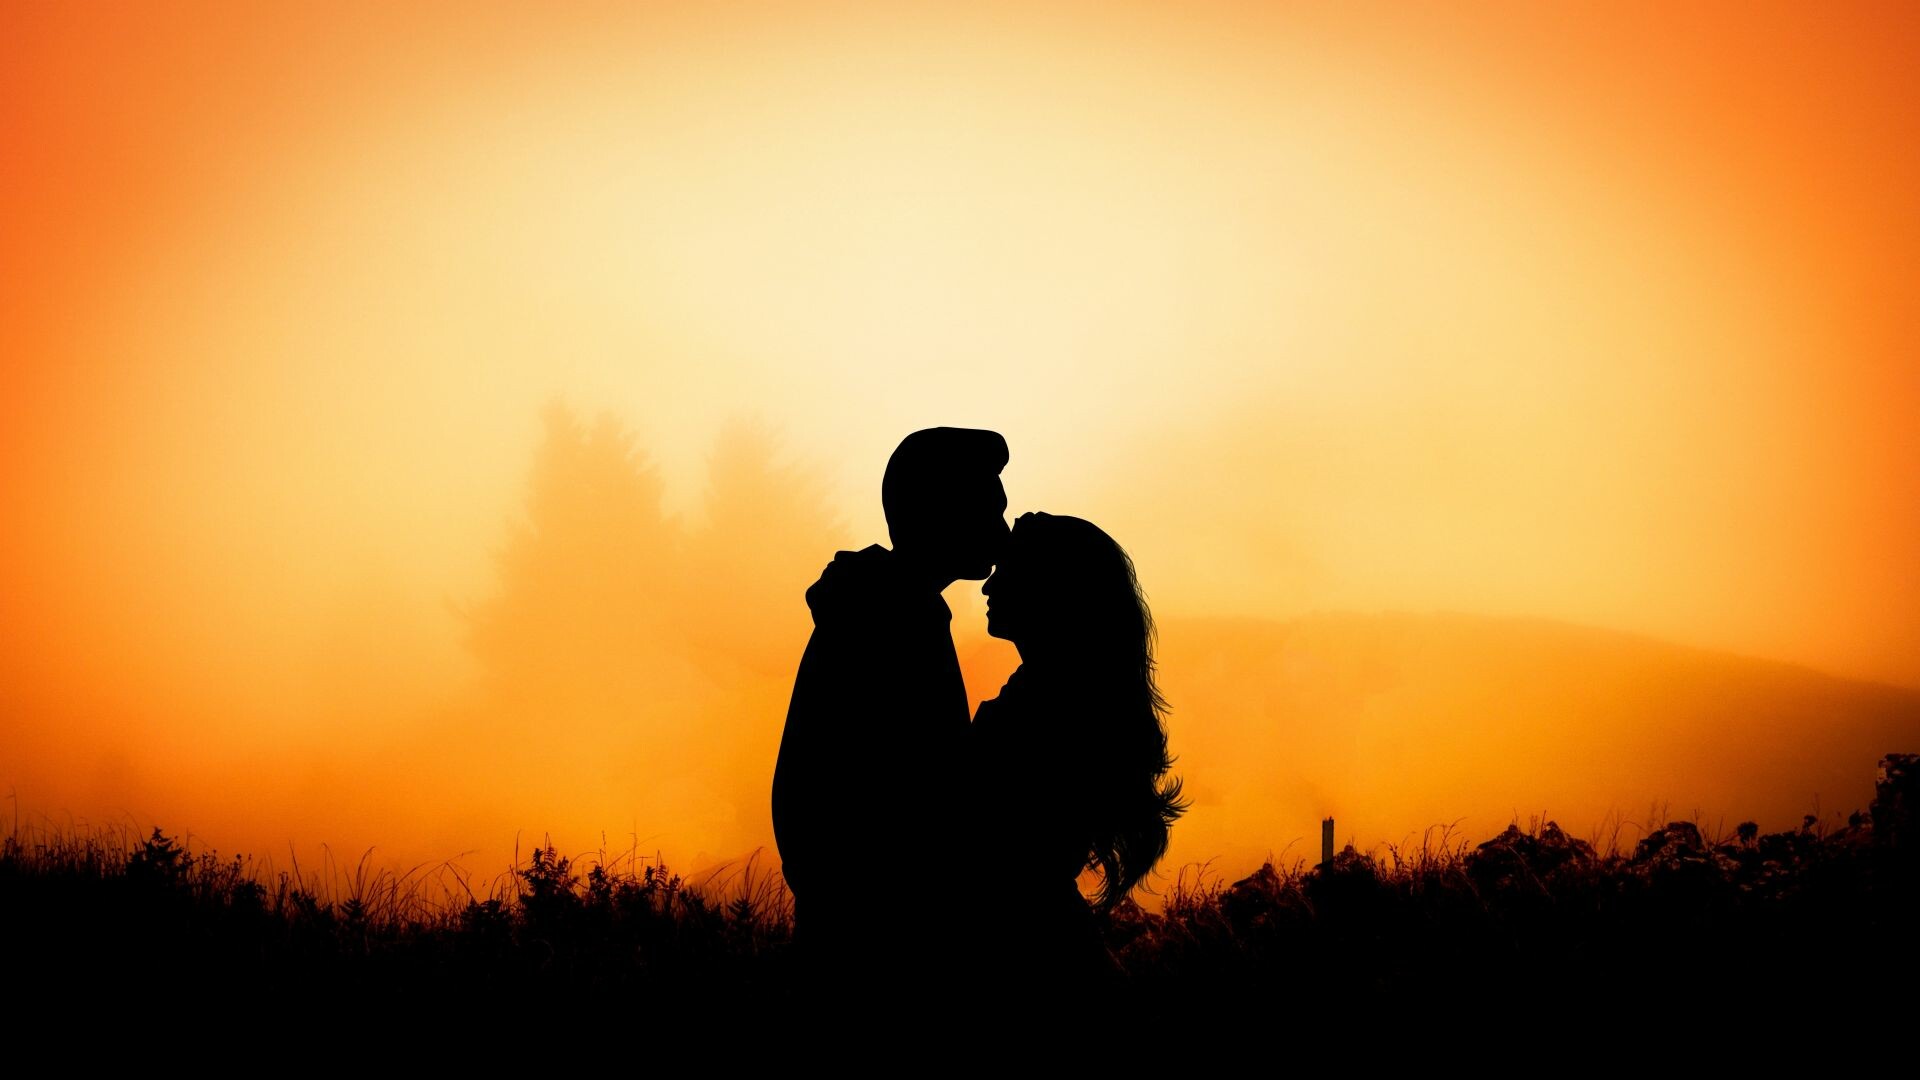 Outdoor sunset hug, Romantic couple, Love and intimacy, Mesmerizing backdrop, 1920x1080 Full HD Desktop